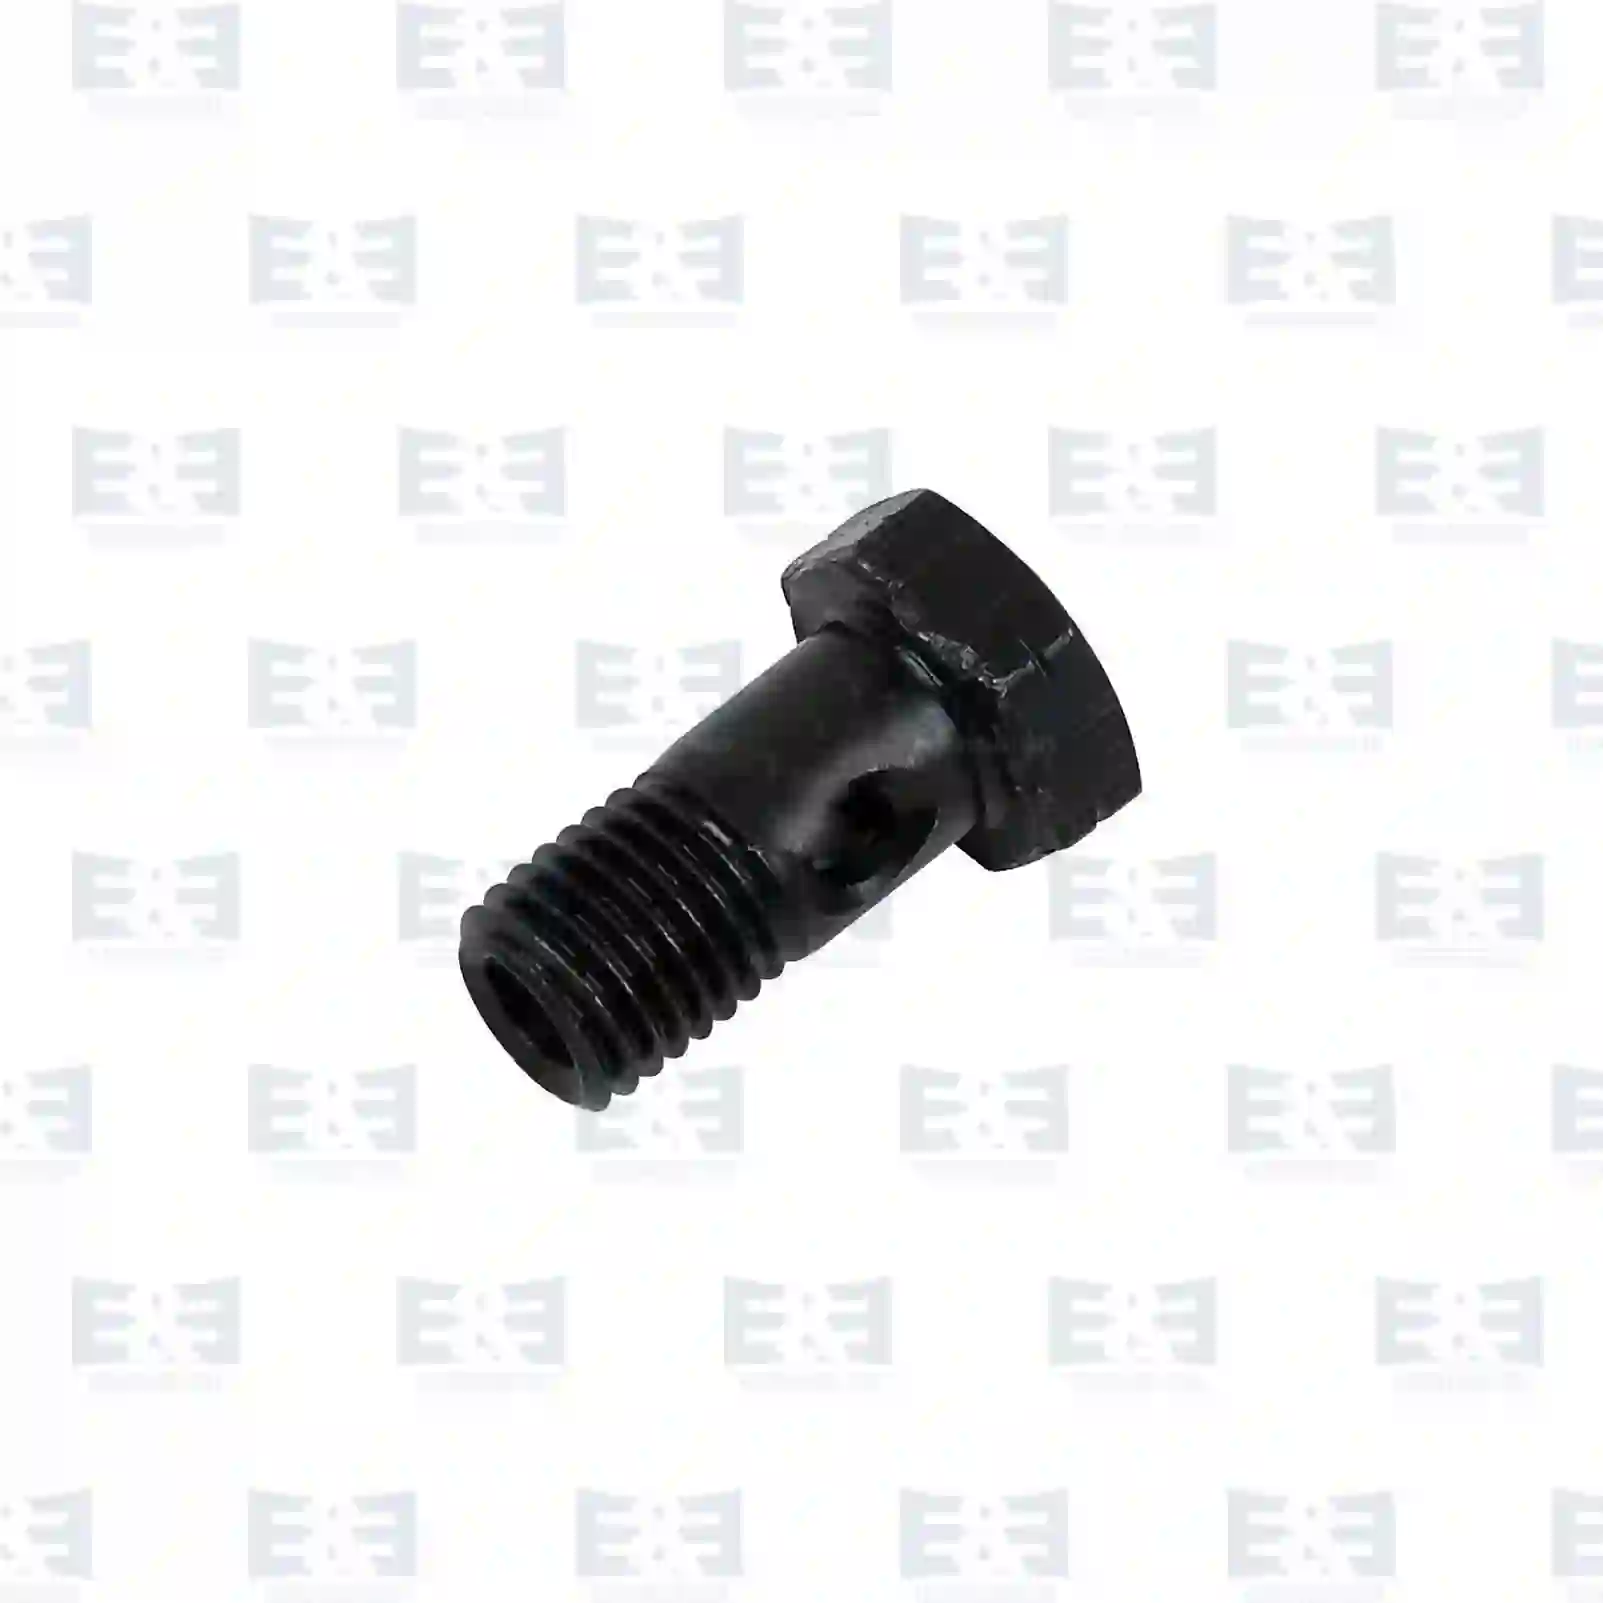  Hollow screw || E&E Truck Spare Parts | Truck Spare Parts, Auotomotive Spare Parts